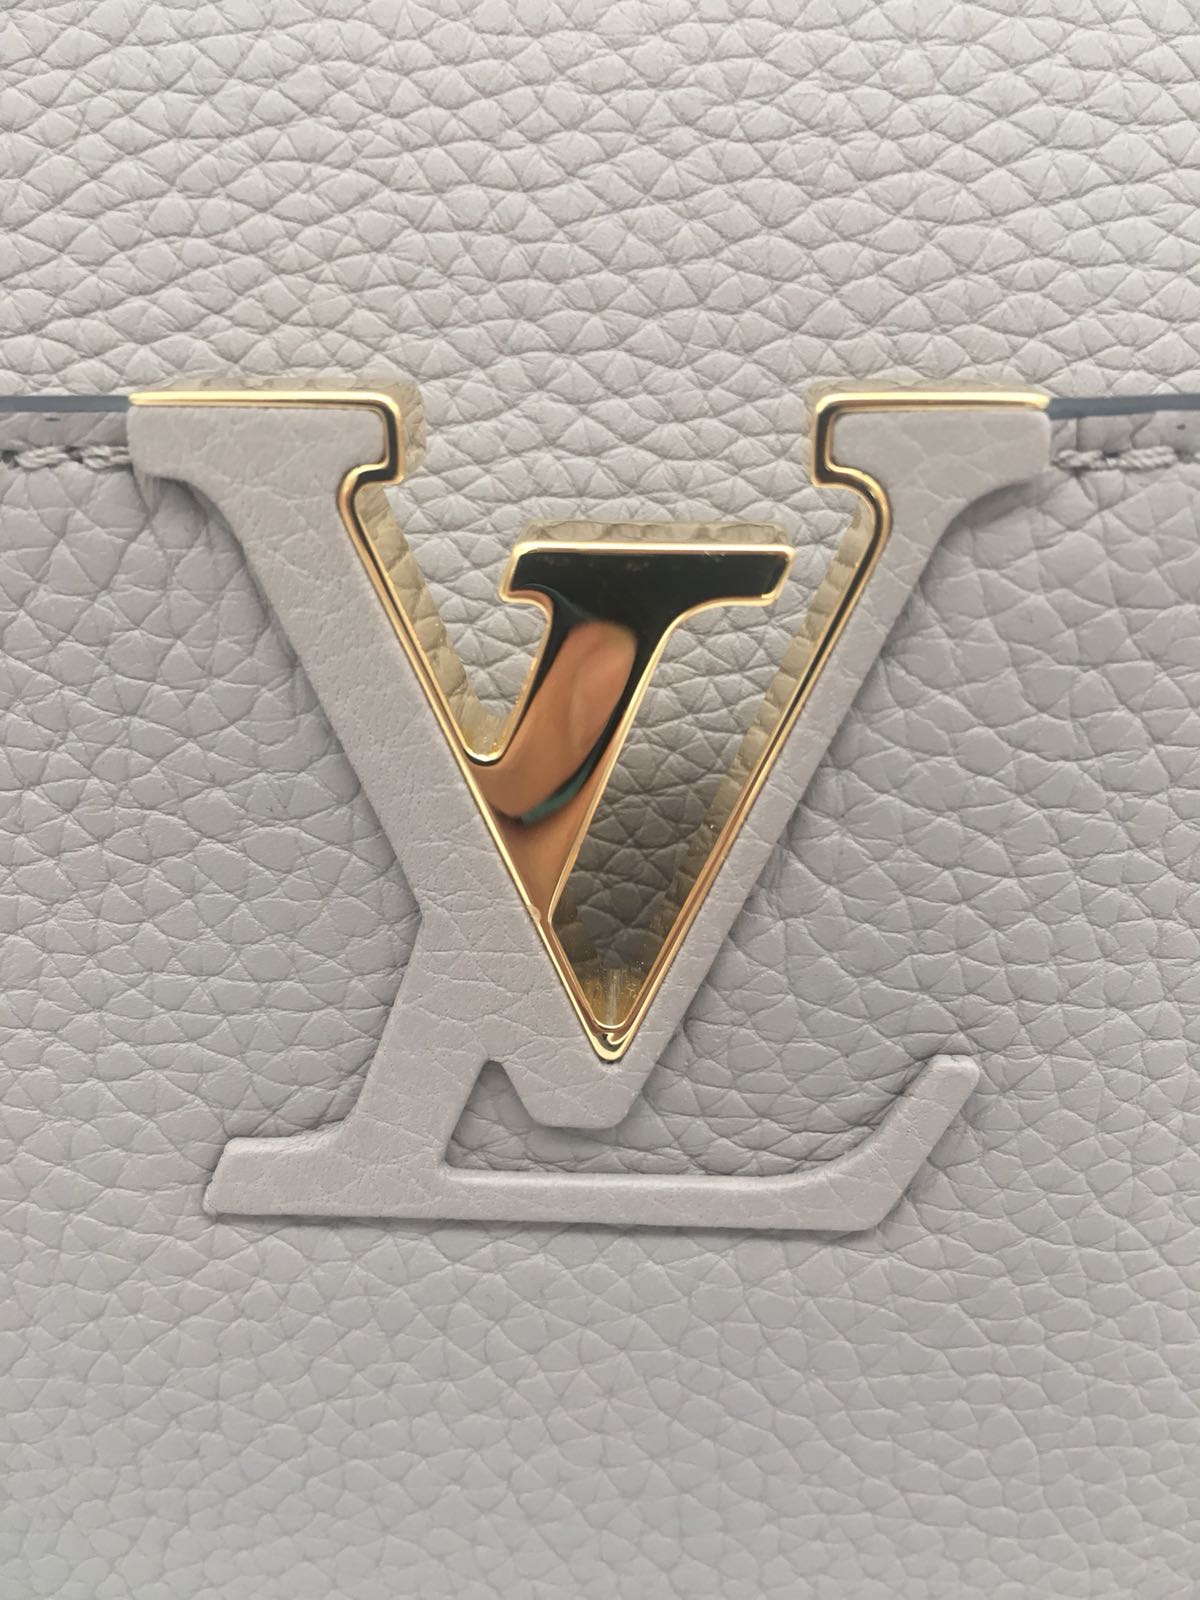 Louis Vuitton Beige Taurillon Leather Capucines MM Bag